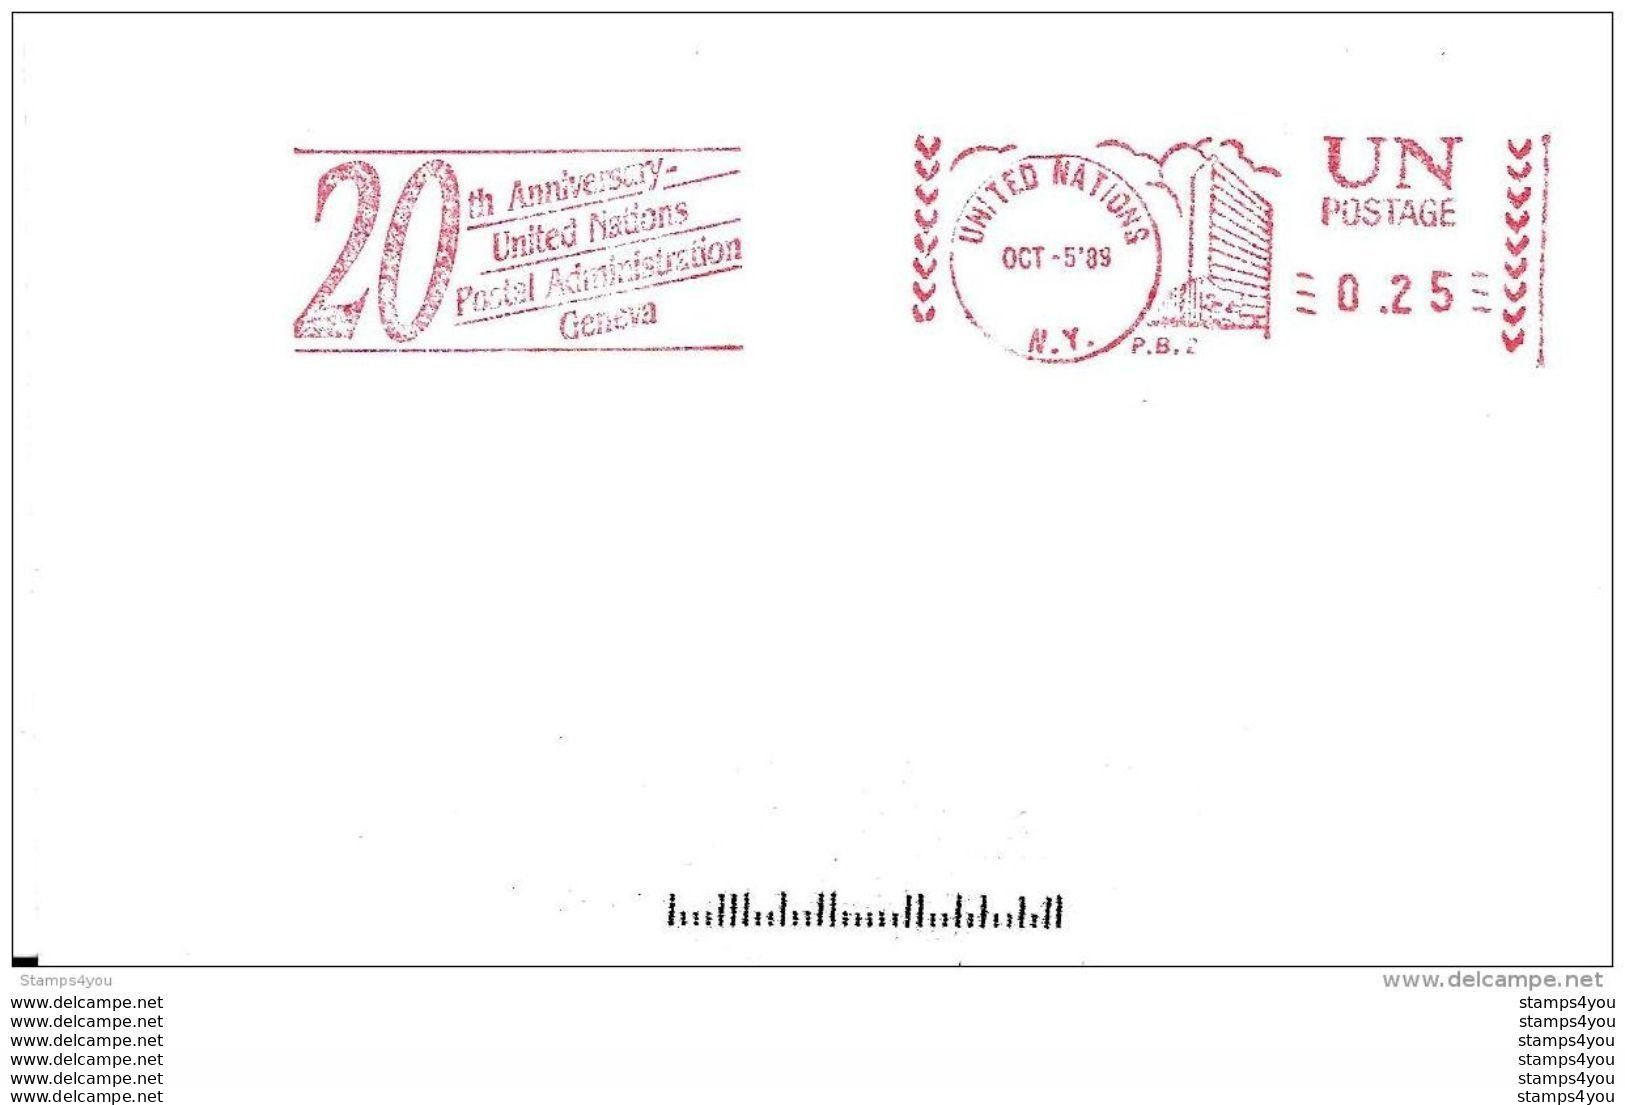 56 - 99 - Enveloppe Nataions Unies New York - Oblit Mécanique 20th Anniversary 1989 - Briefe U. Dokumente